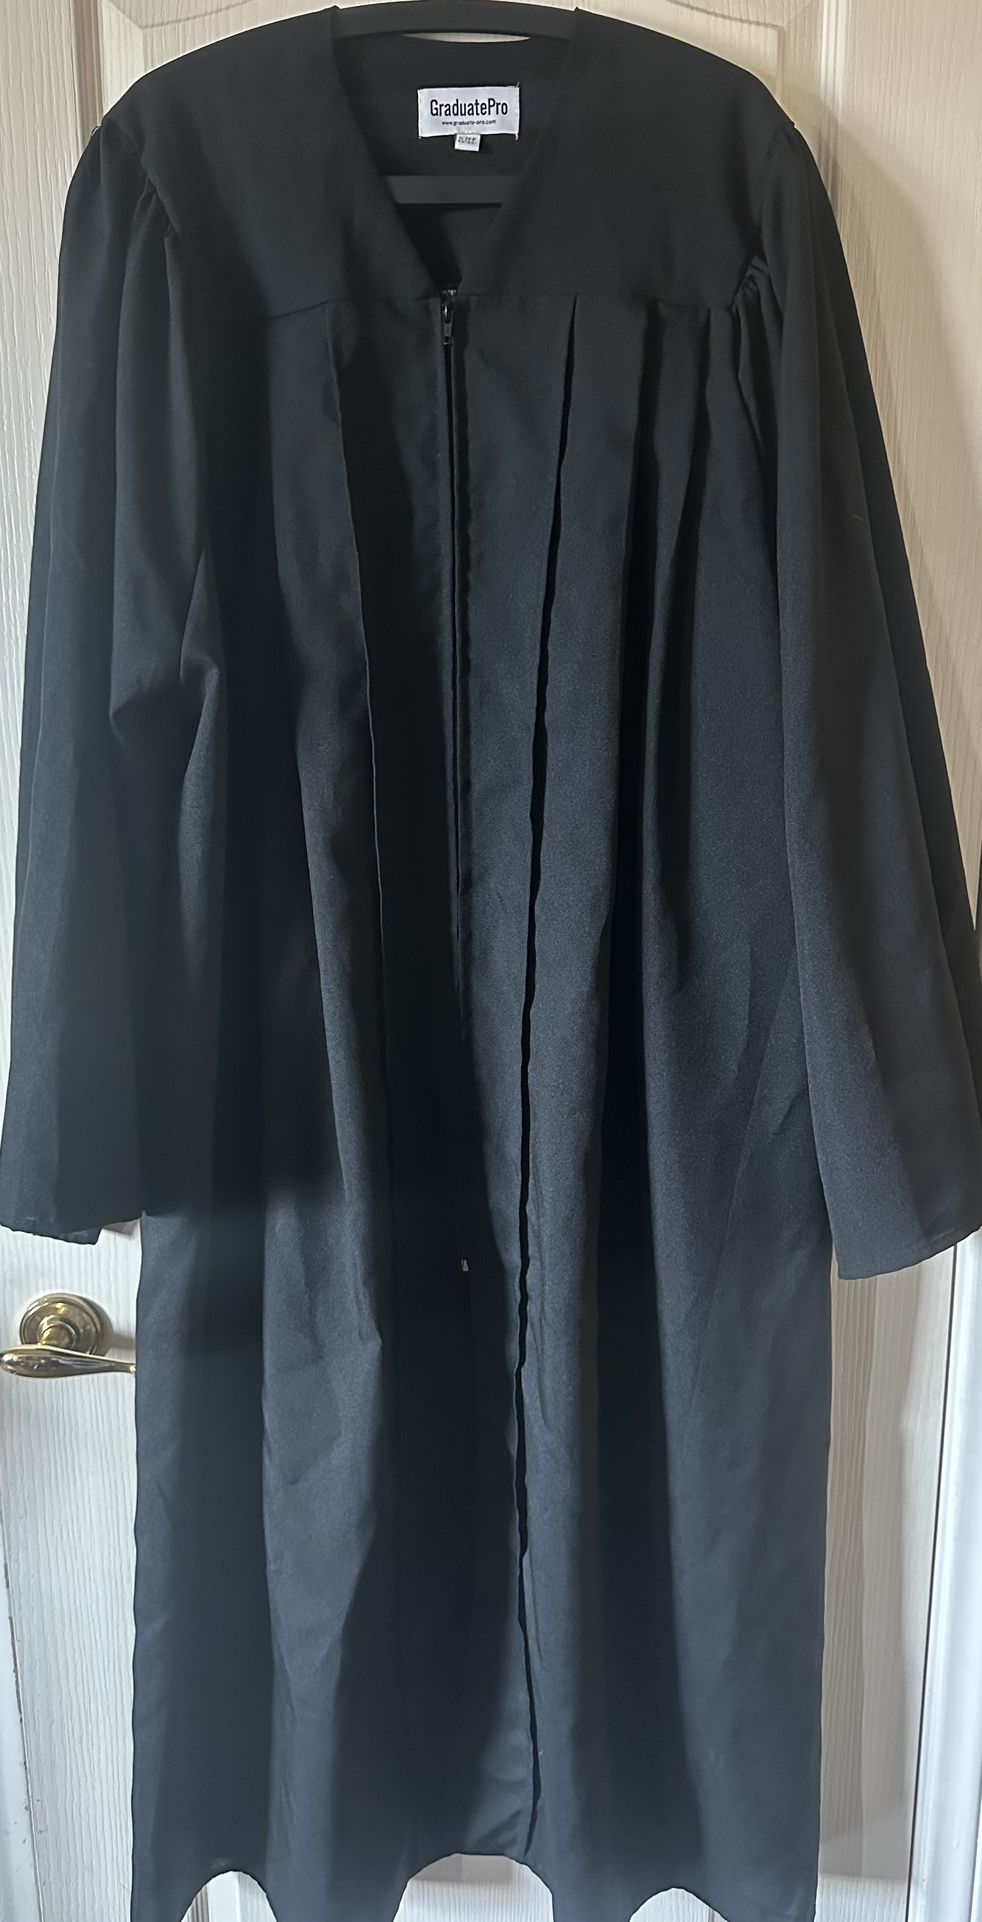 Black Graduation Robe 57FF 6’0” - 6’2” Worn Once 